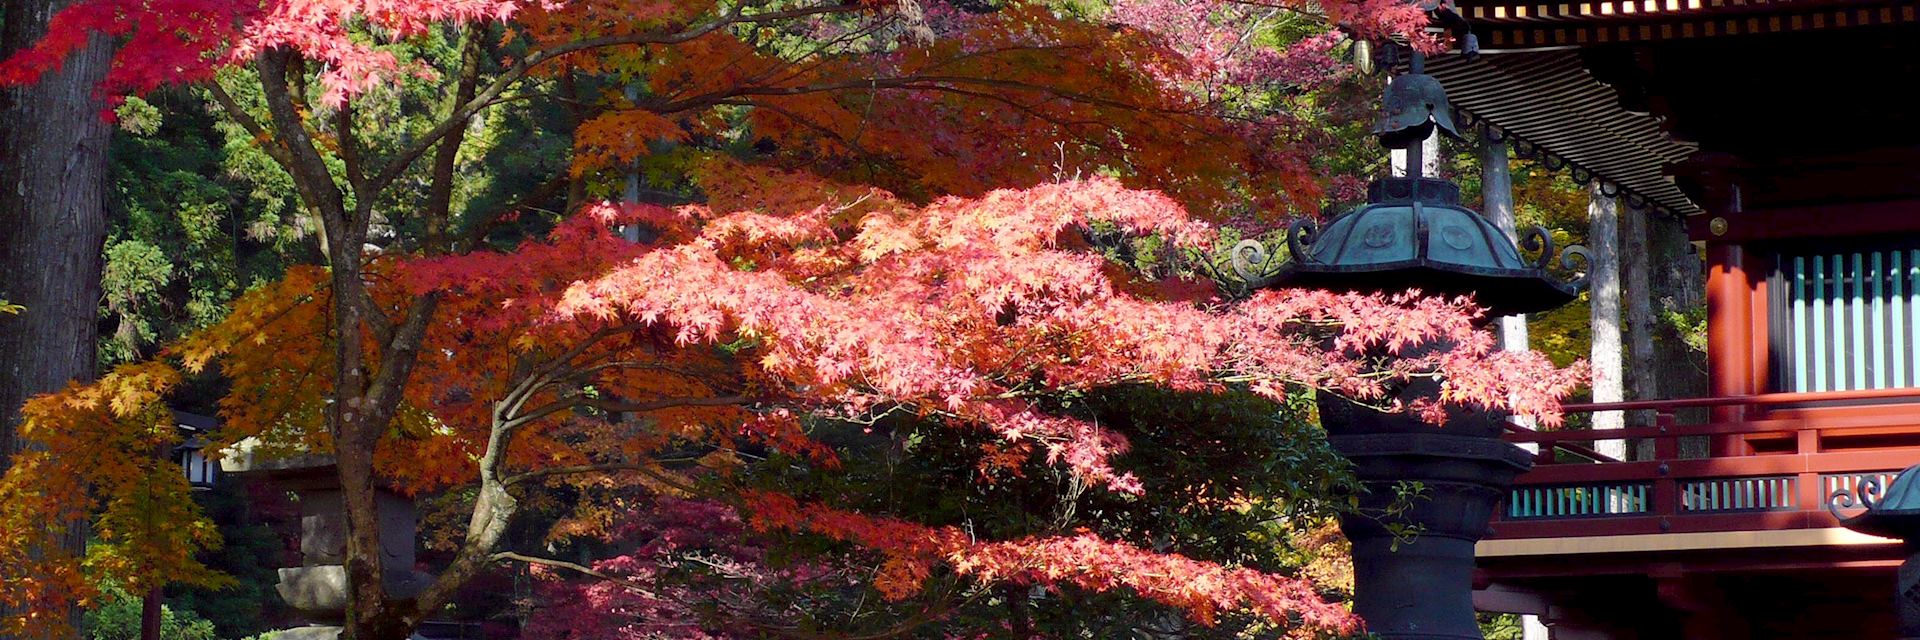 Autumn leaves in Nikko, Japan